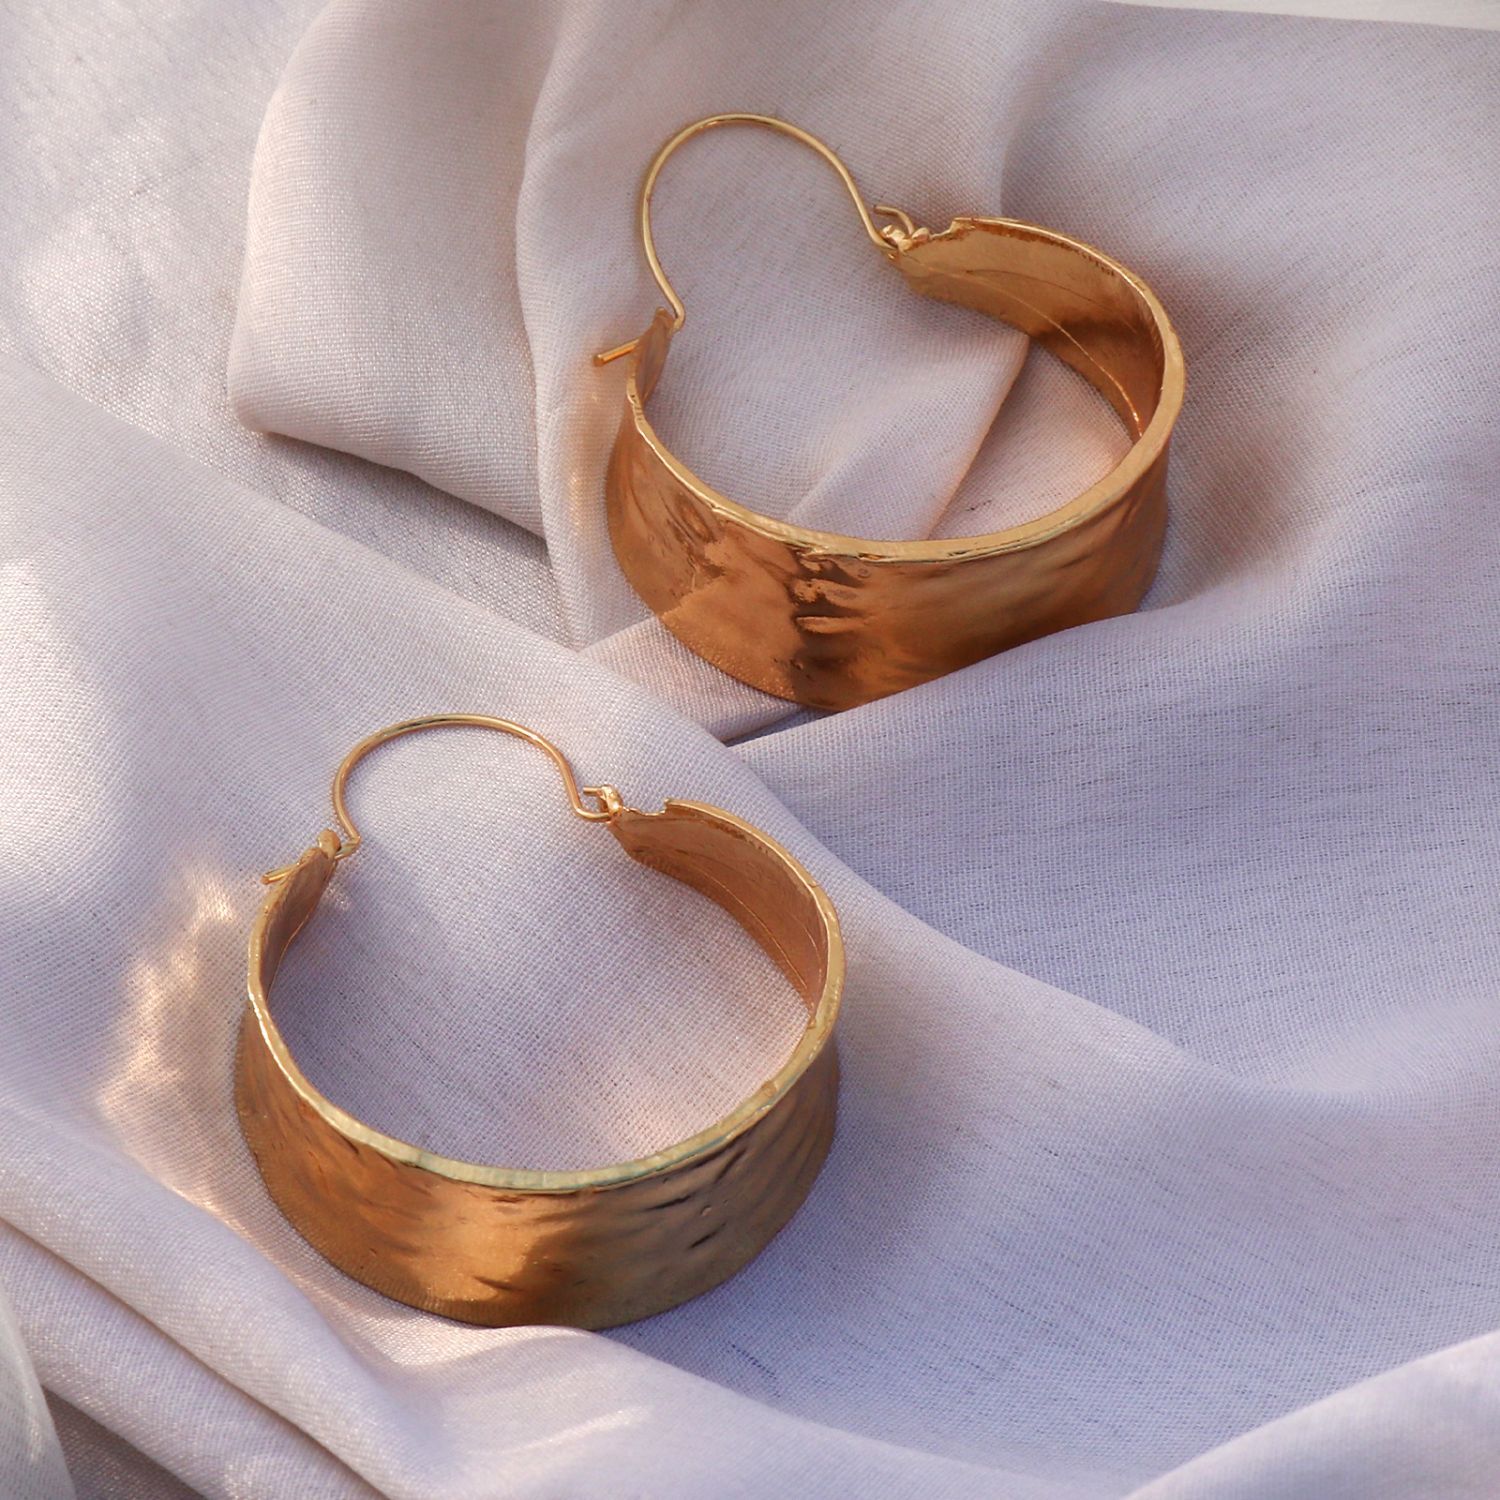 Buy Hammered Gold Hoop Earrings 14K Gold Filled Hoops Gold Online in India   Etsy